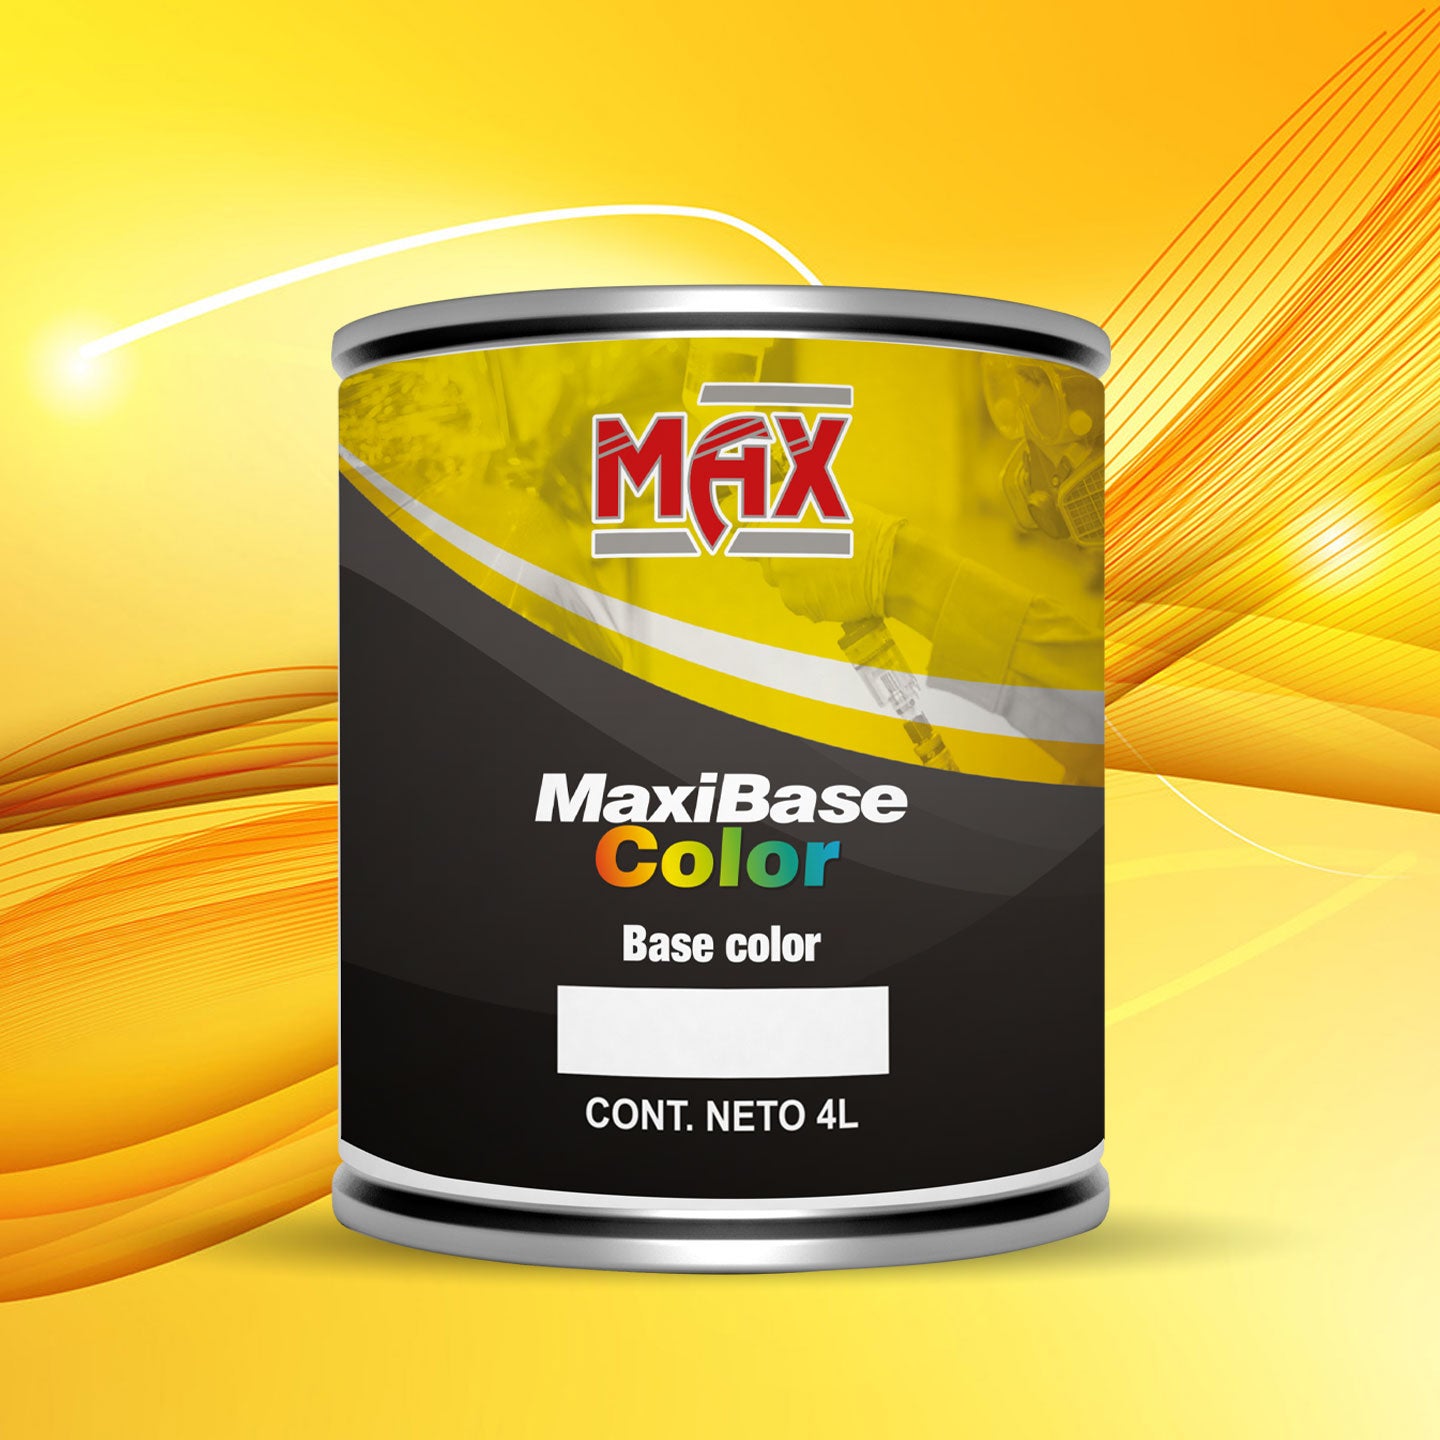 MaxiBase Blanco 4L + Thinner Universal Medio (16°C-25°C) 4L